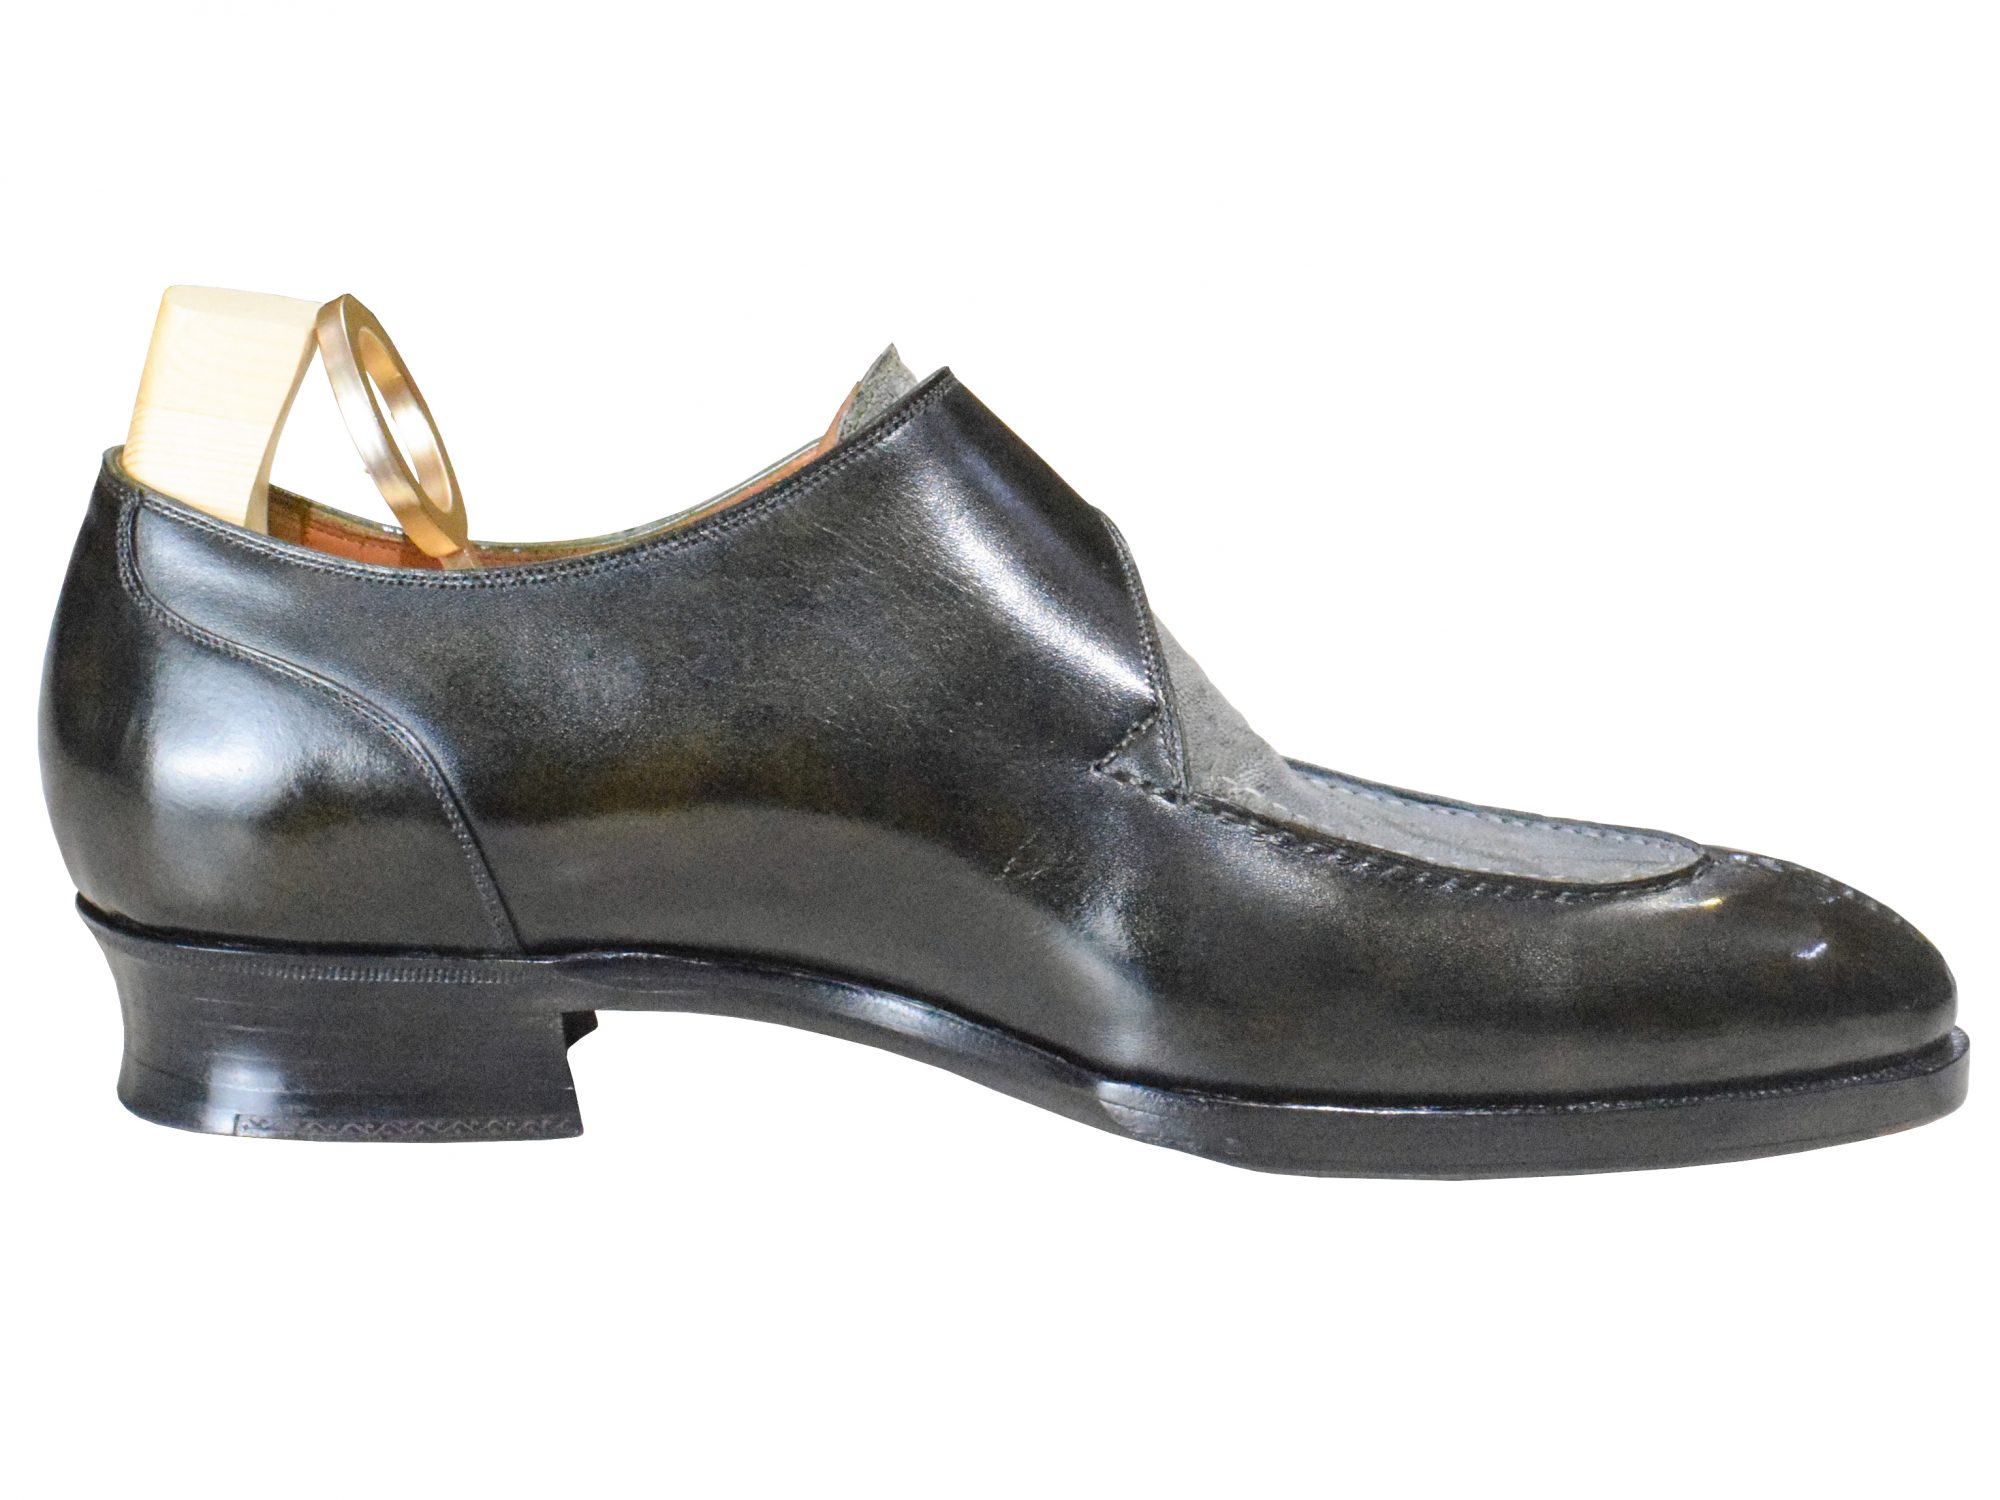 MTO Single monkstrap split toe shoes - Elephant leather